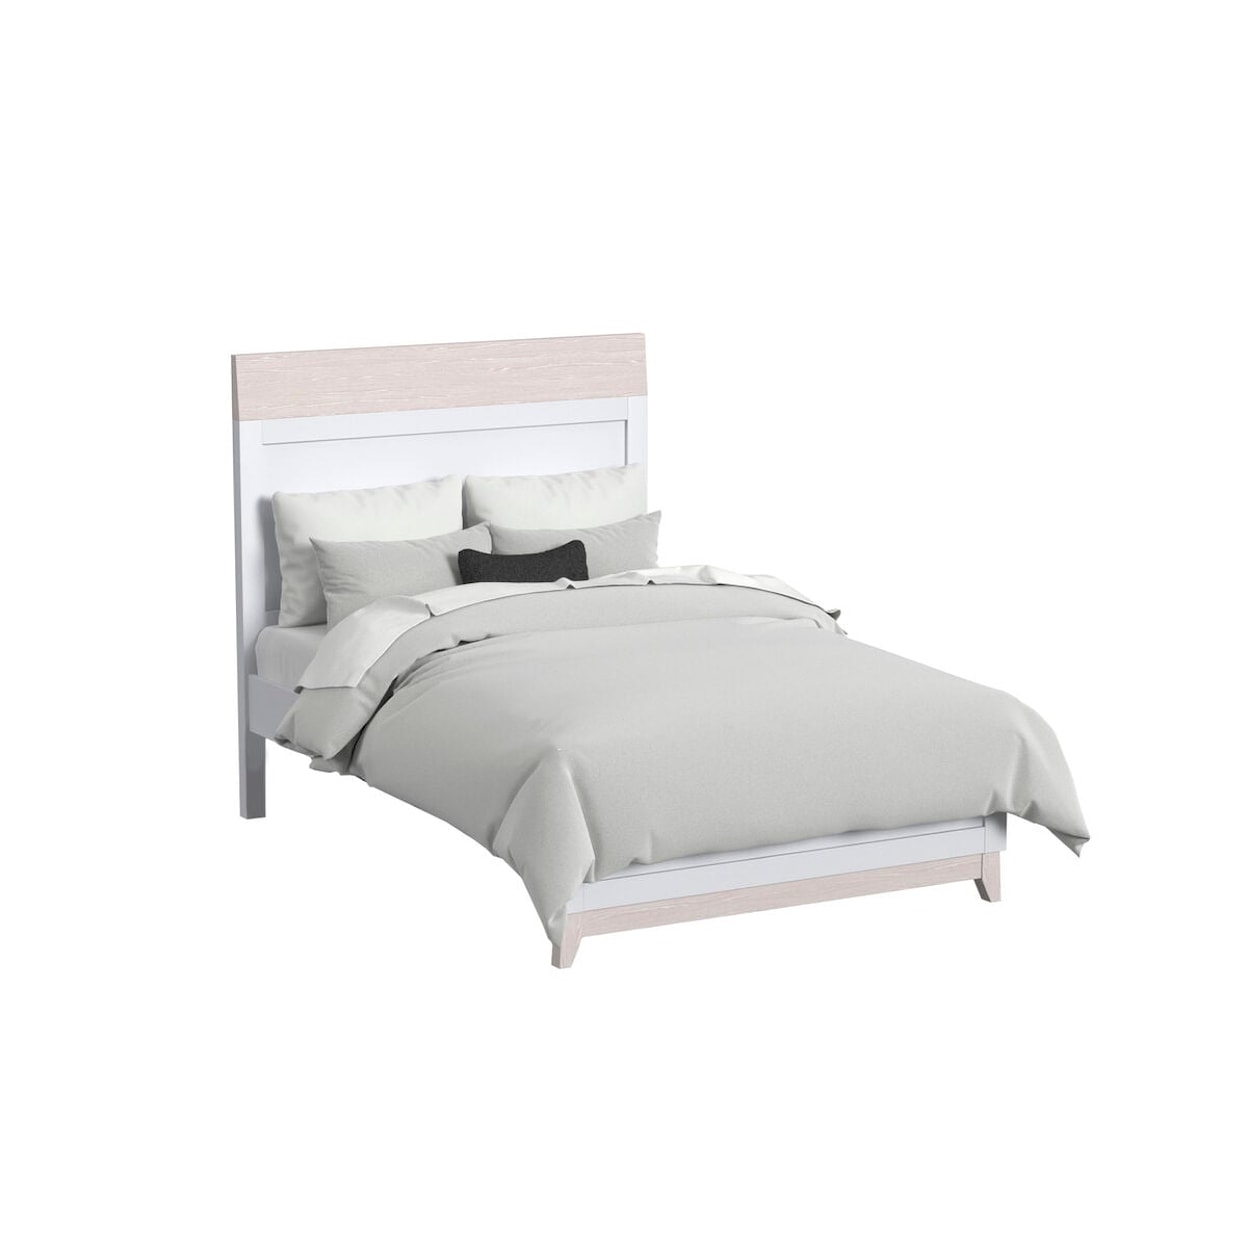 Westwood Design Rowan Full Bed